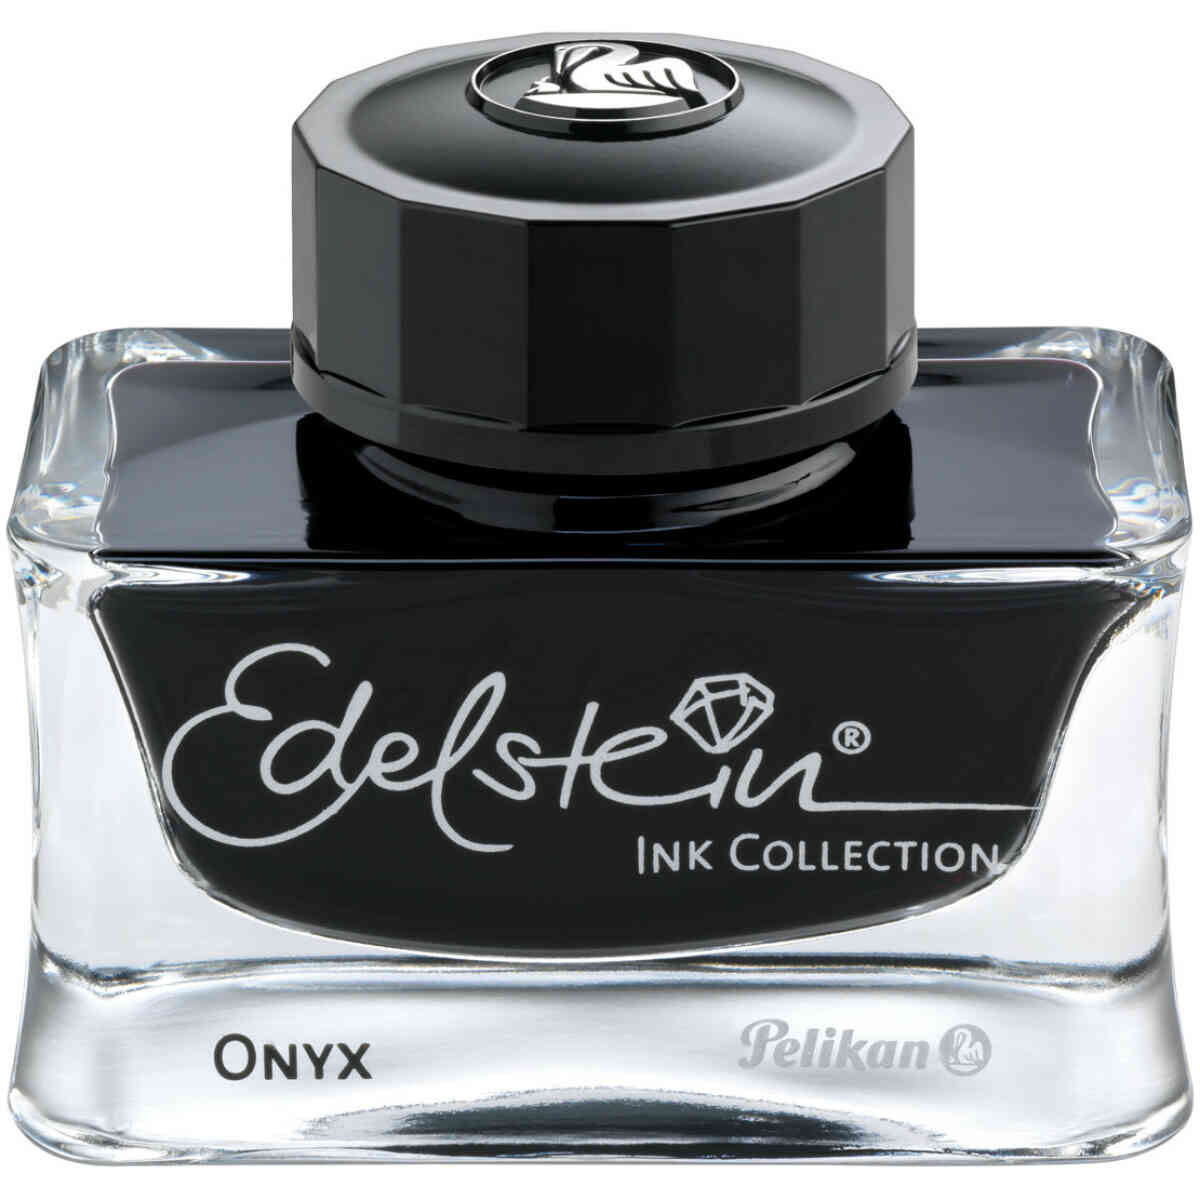 339408 EBD 08 2010 Onyx Edelstein Ink 4486 highres